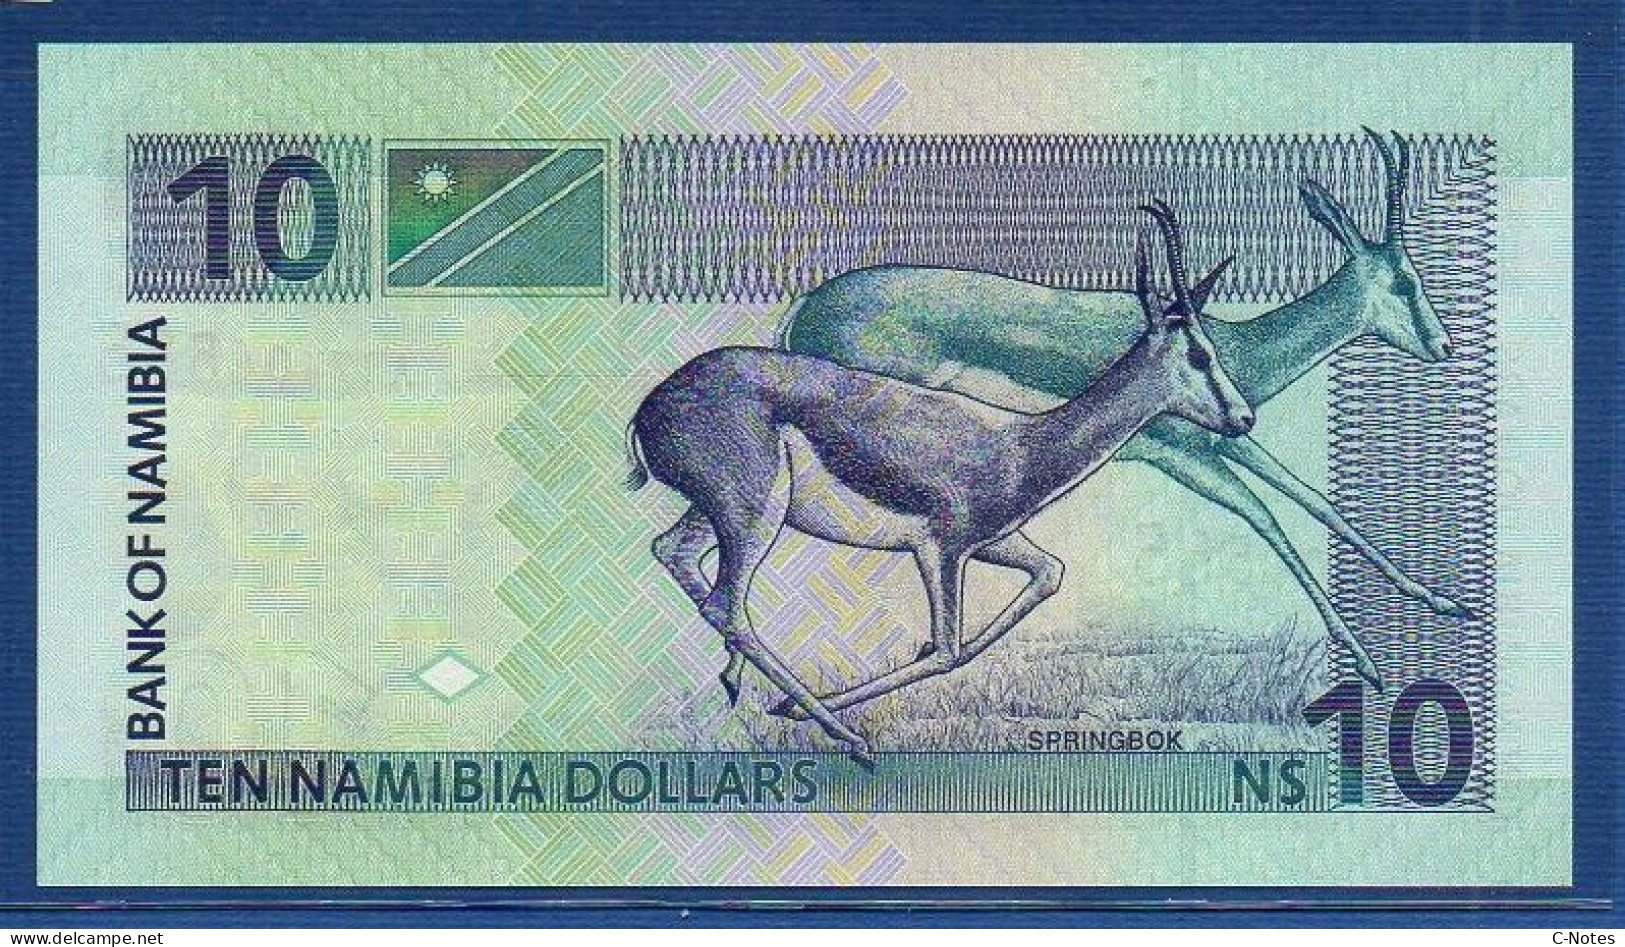 NAMIBIA - P. 4bA2 – 10 Namibia Dollars ND, UNC, S/n A17404585 - Namibia